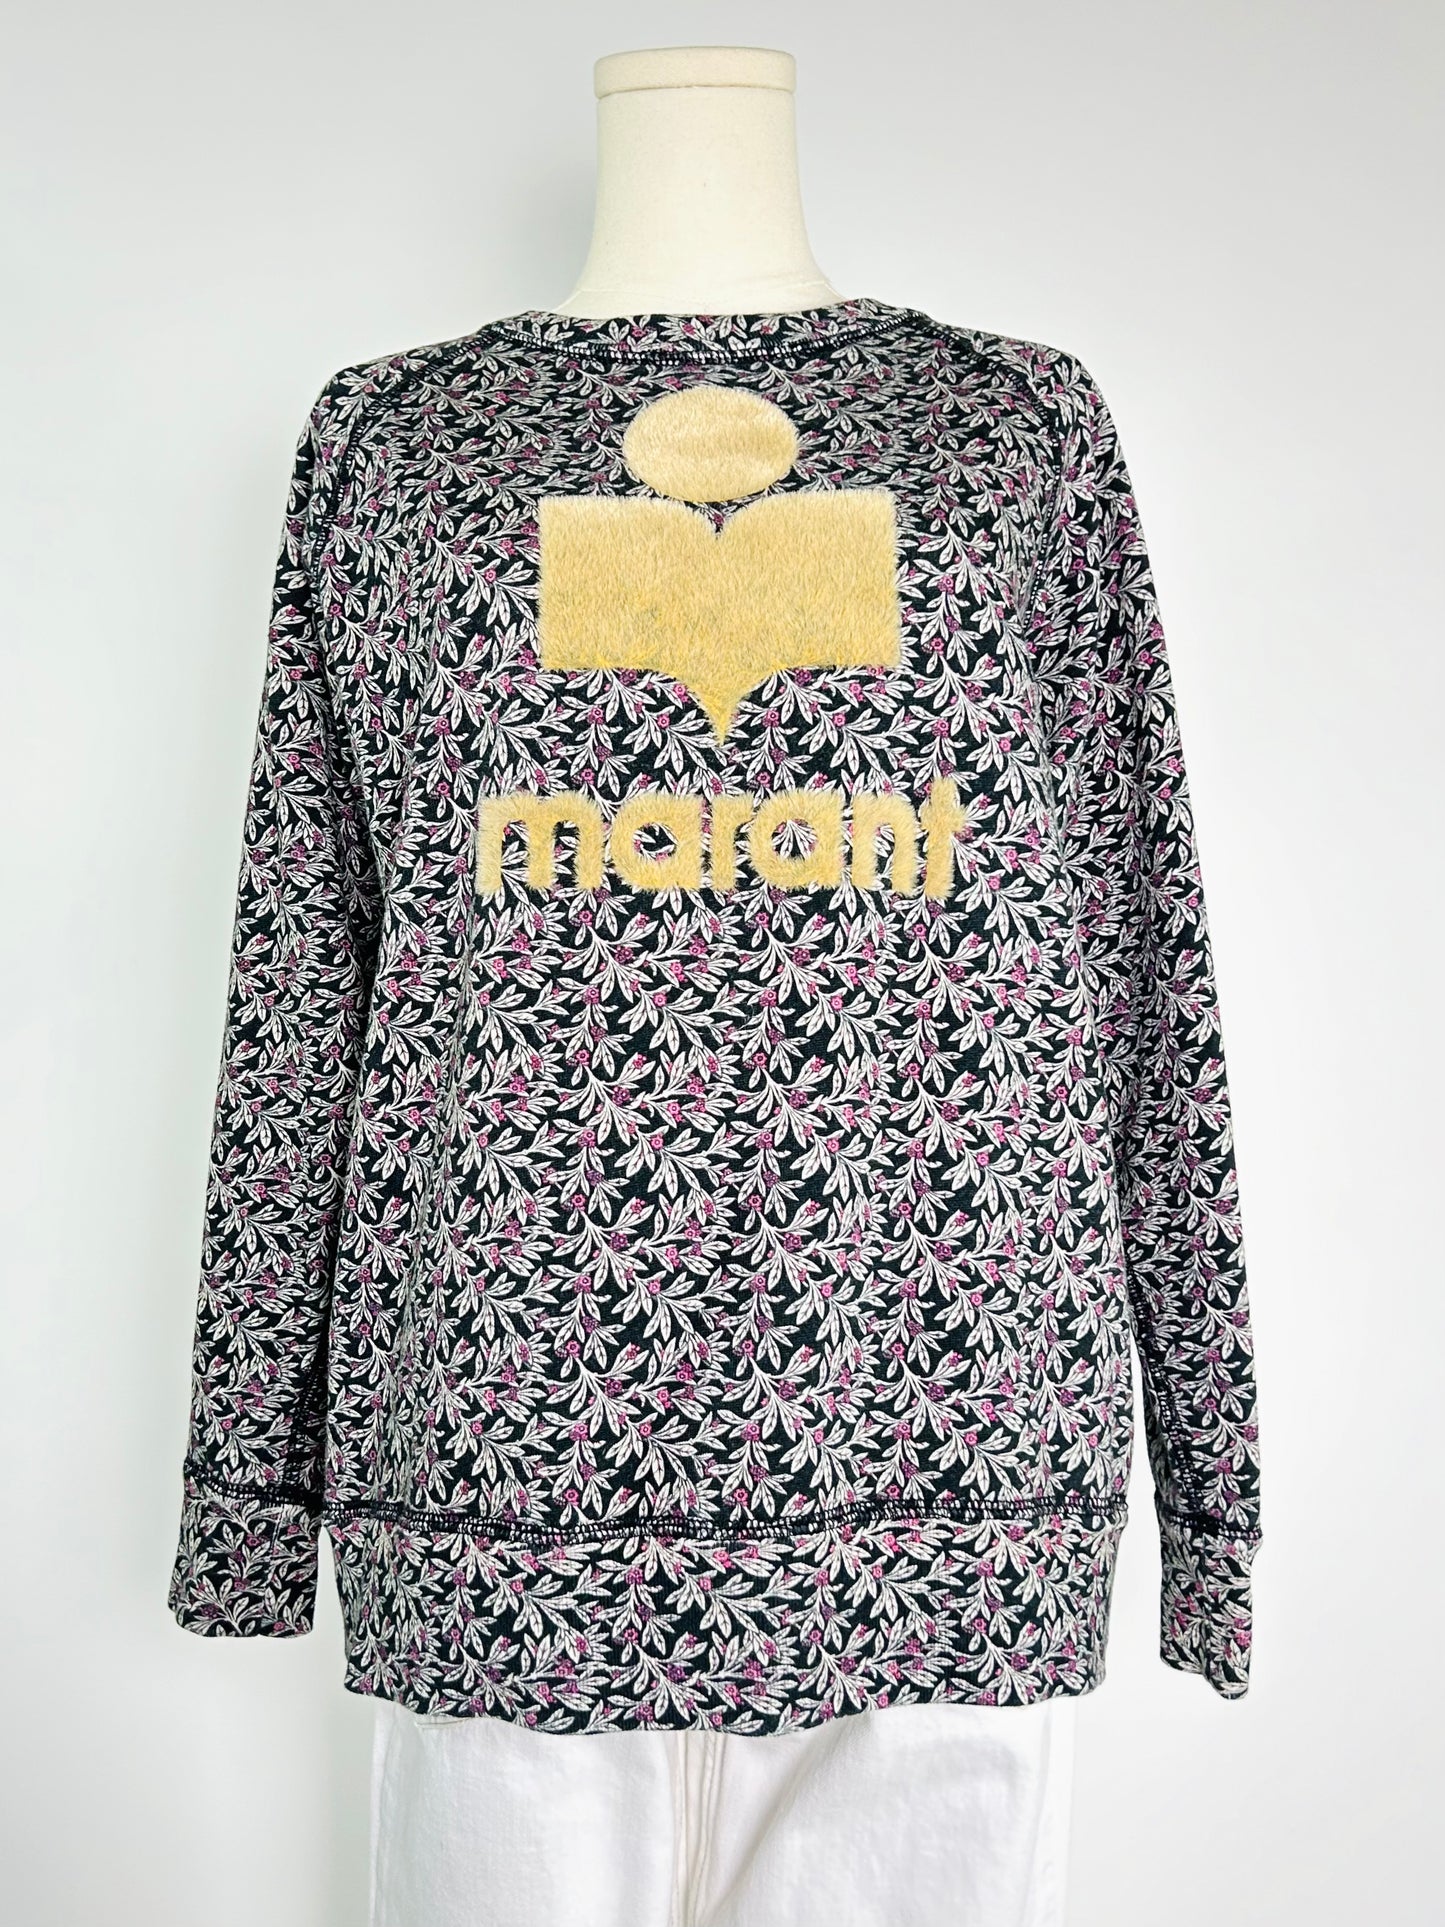 Isabel Marant Floral and Faux Fur Sweatshirt